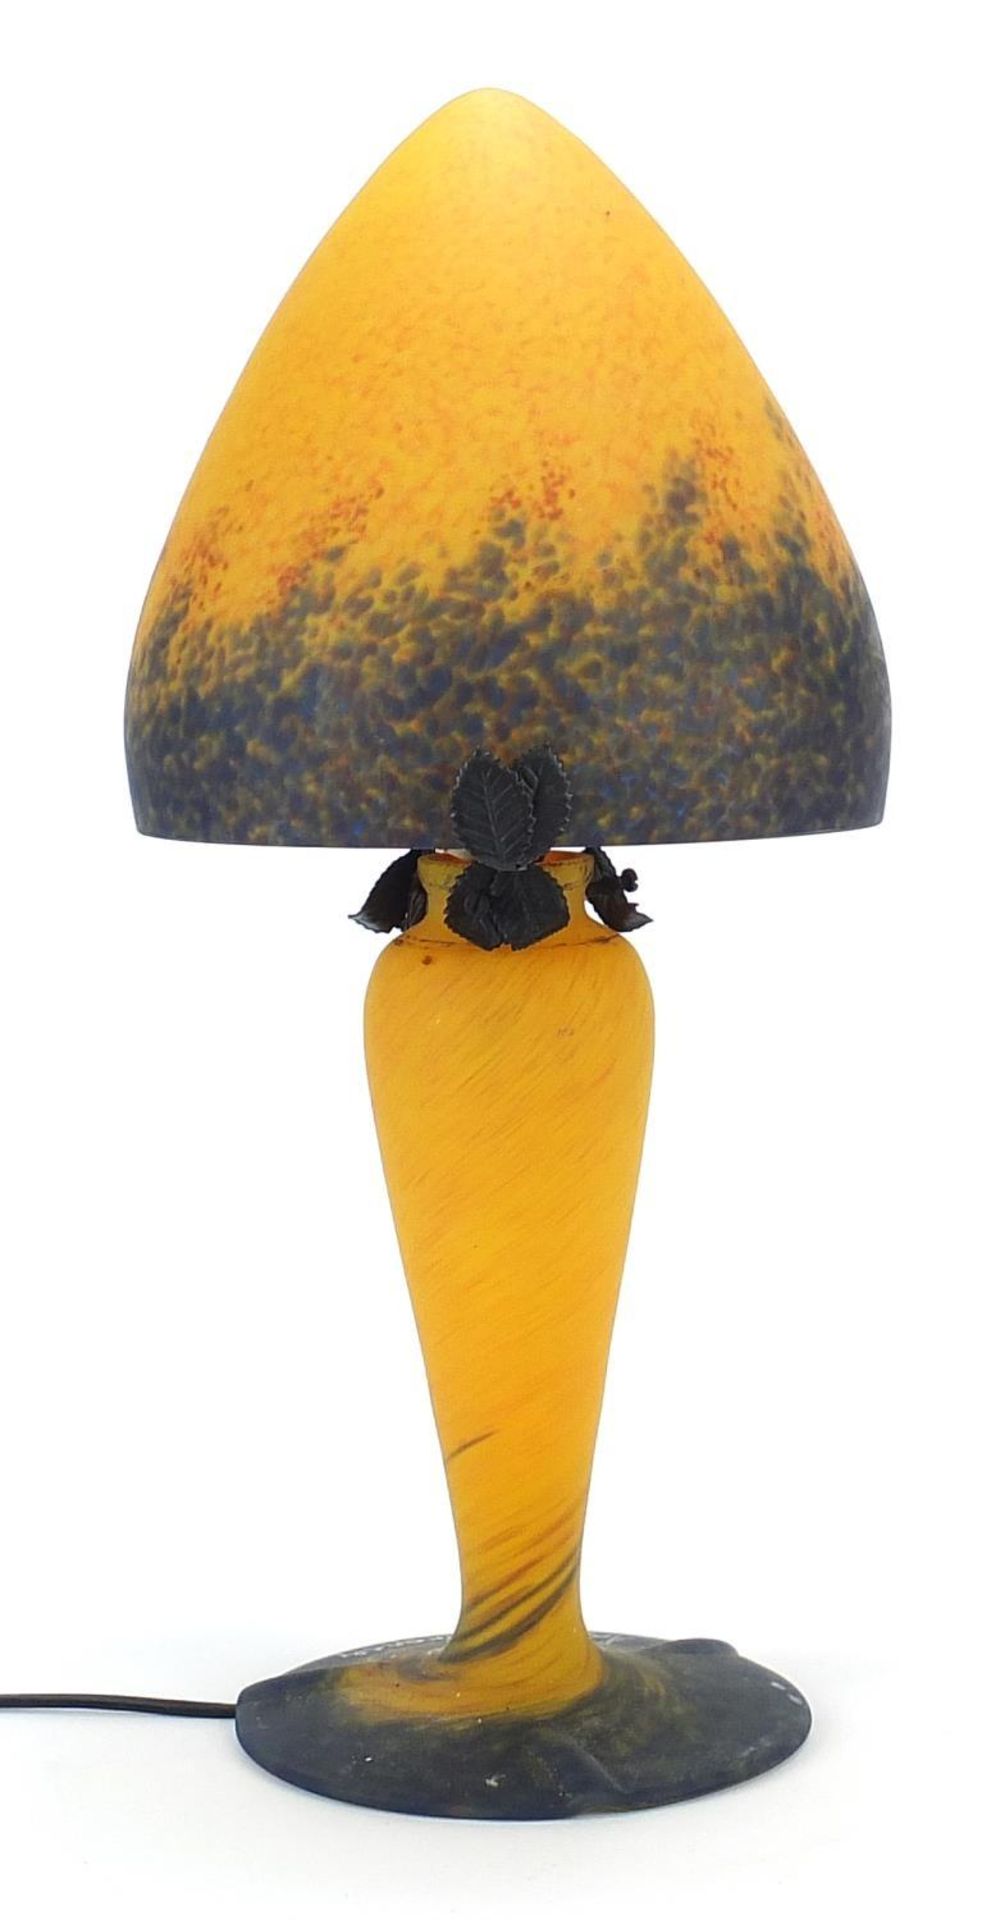 French mottled orange art glass mushroom table lamp with shade, 45.5cm high : - Image 2 of 3